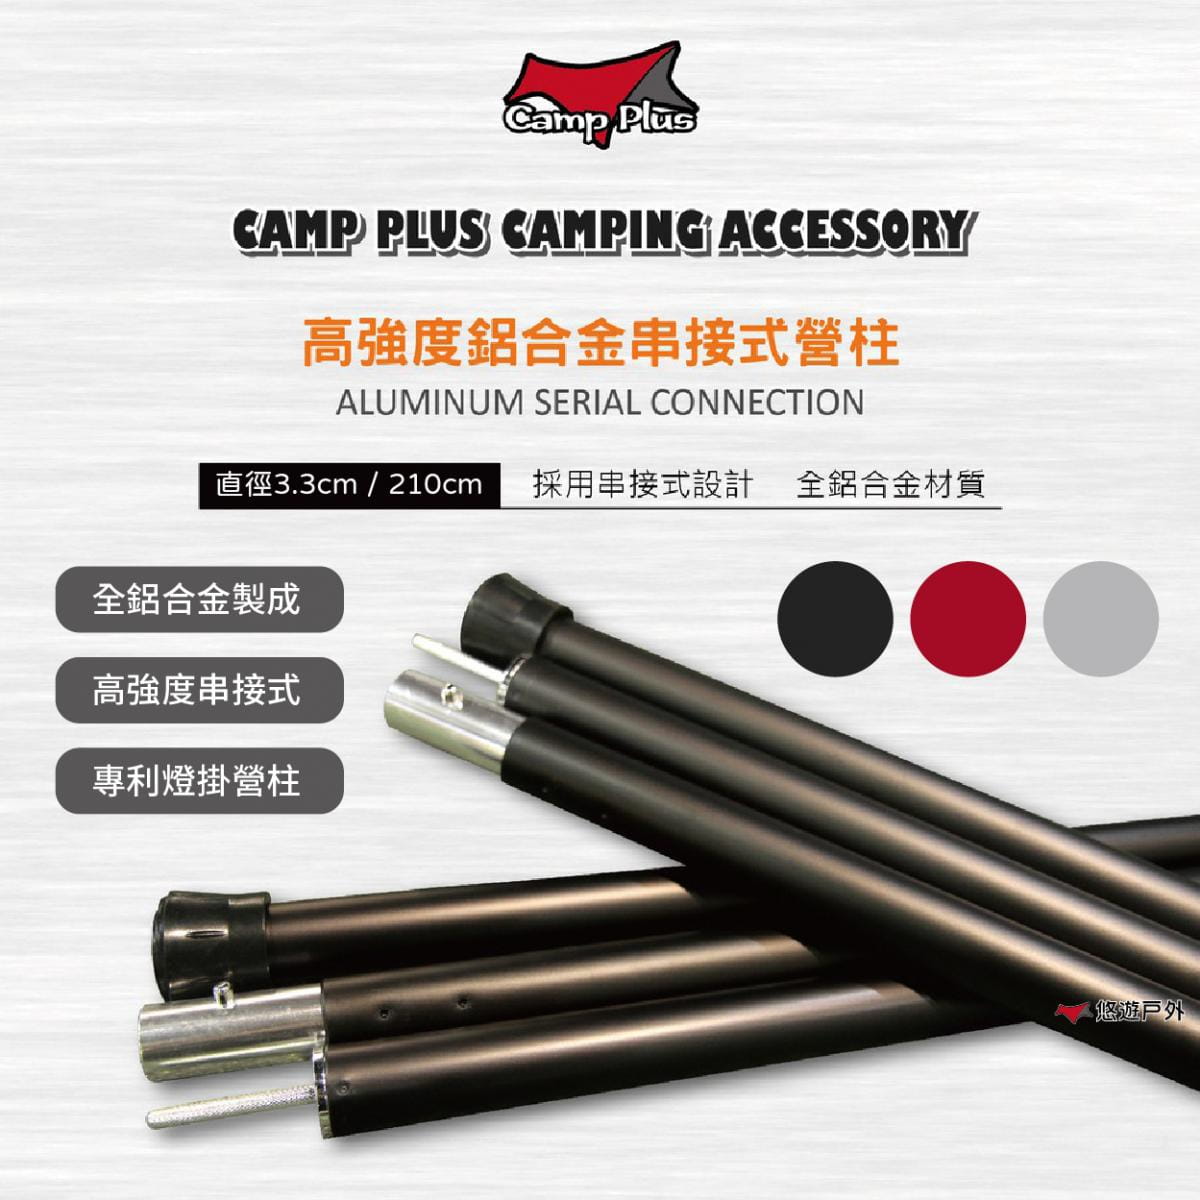 【Camp Plus】 專利燈掛營柱 210cm 霧銀 鋁合金專利營柱 33mm 高強度串接式 0